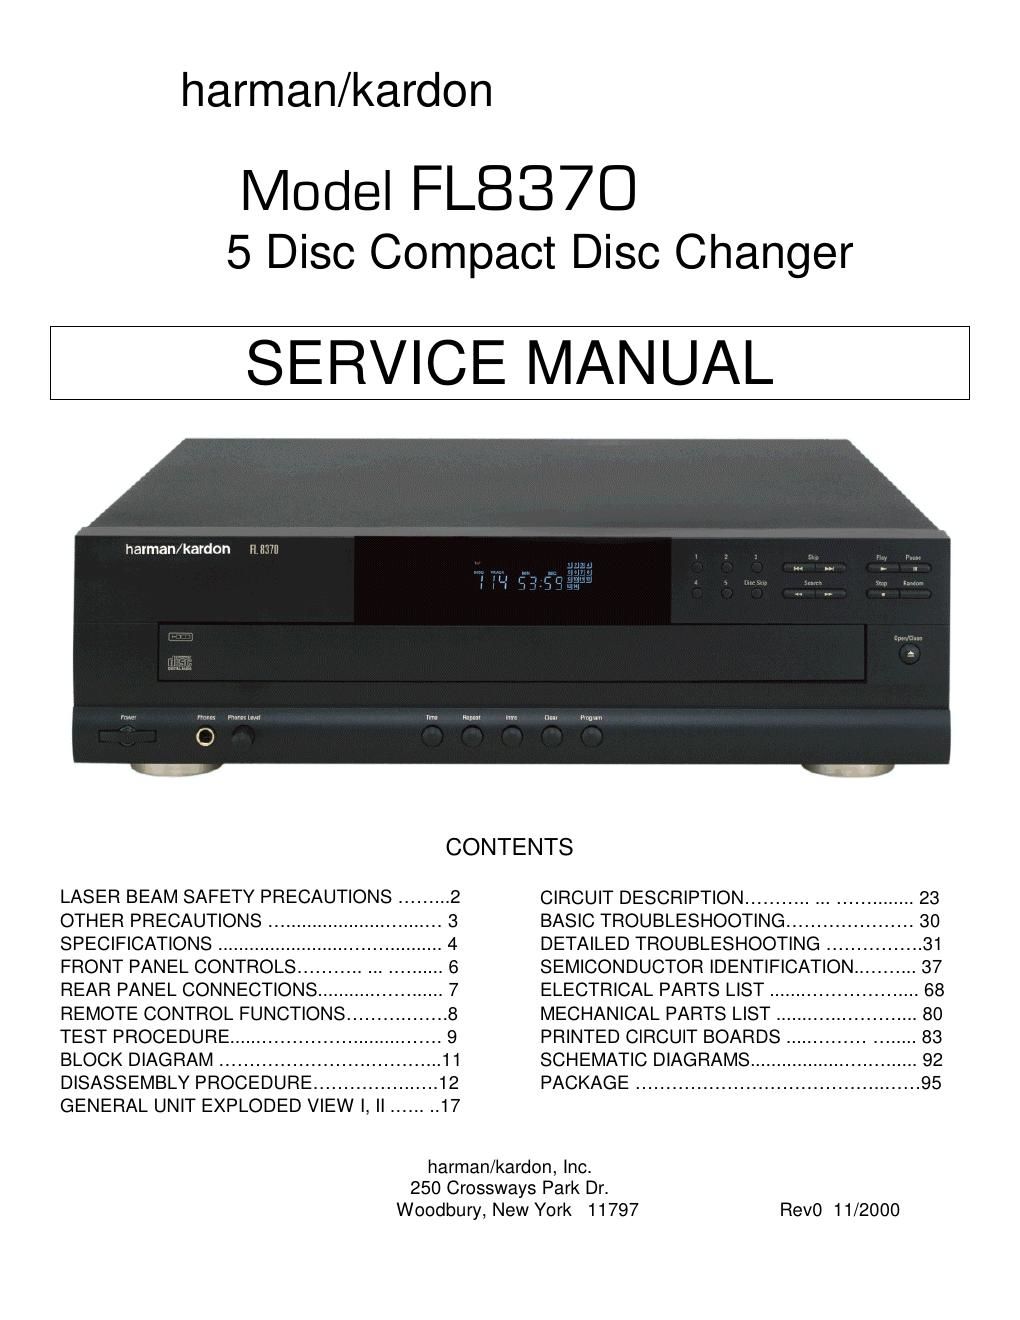 harman kardon fl 8370 service manual